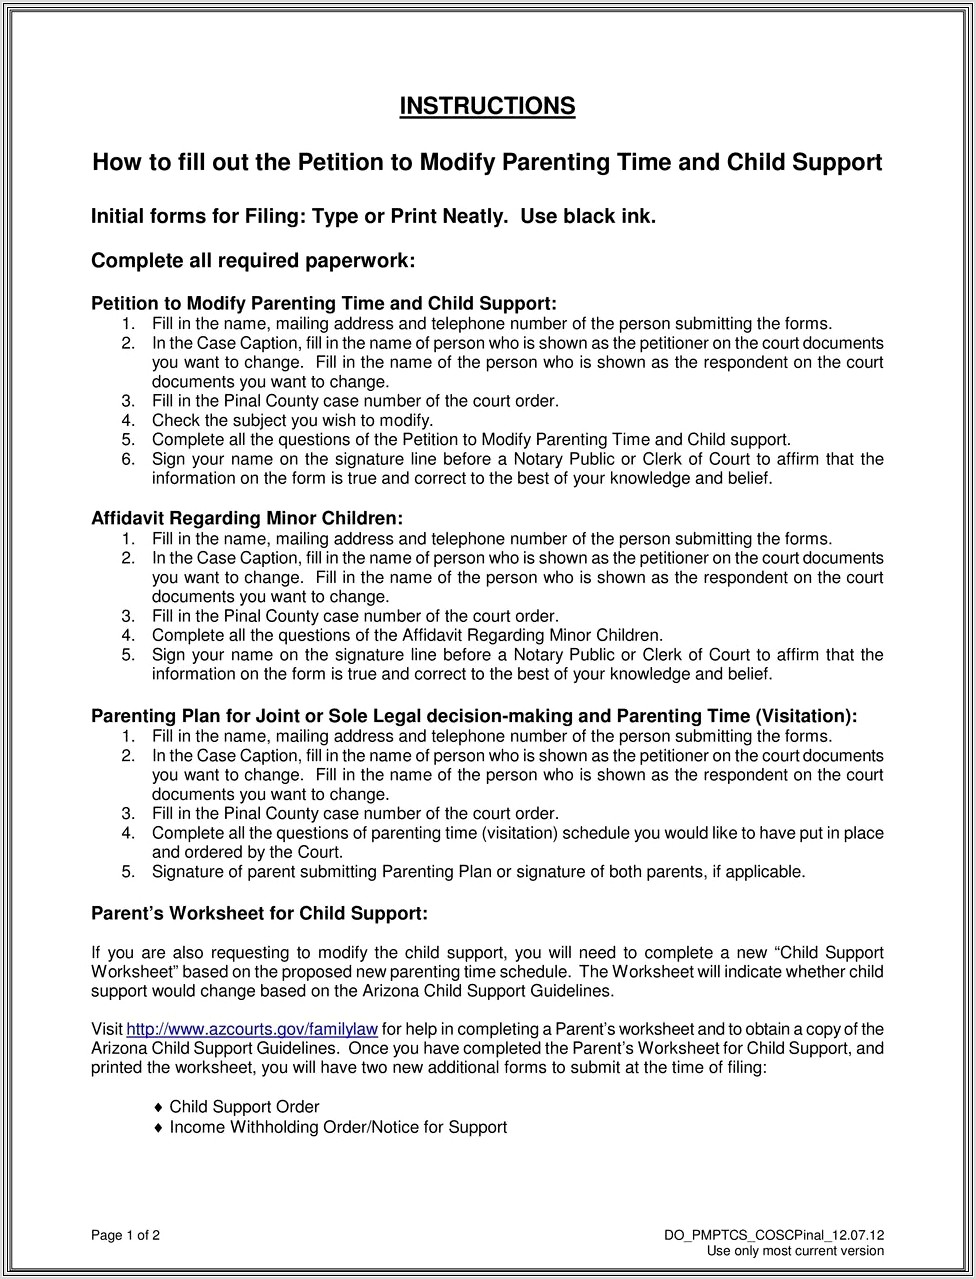 Child Support Worksheet For Arizona